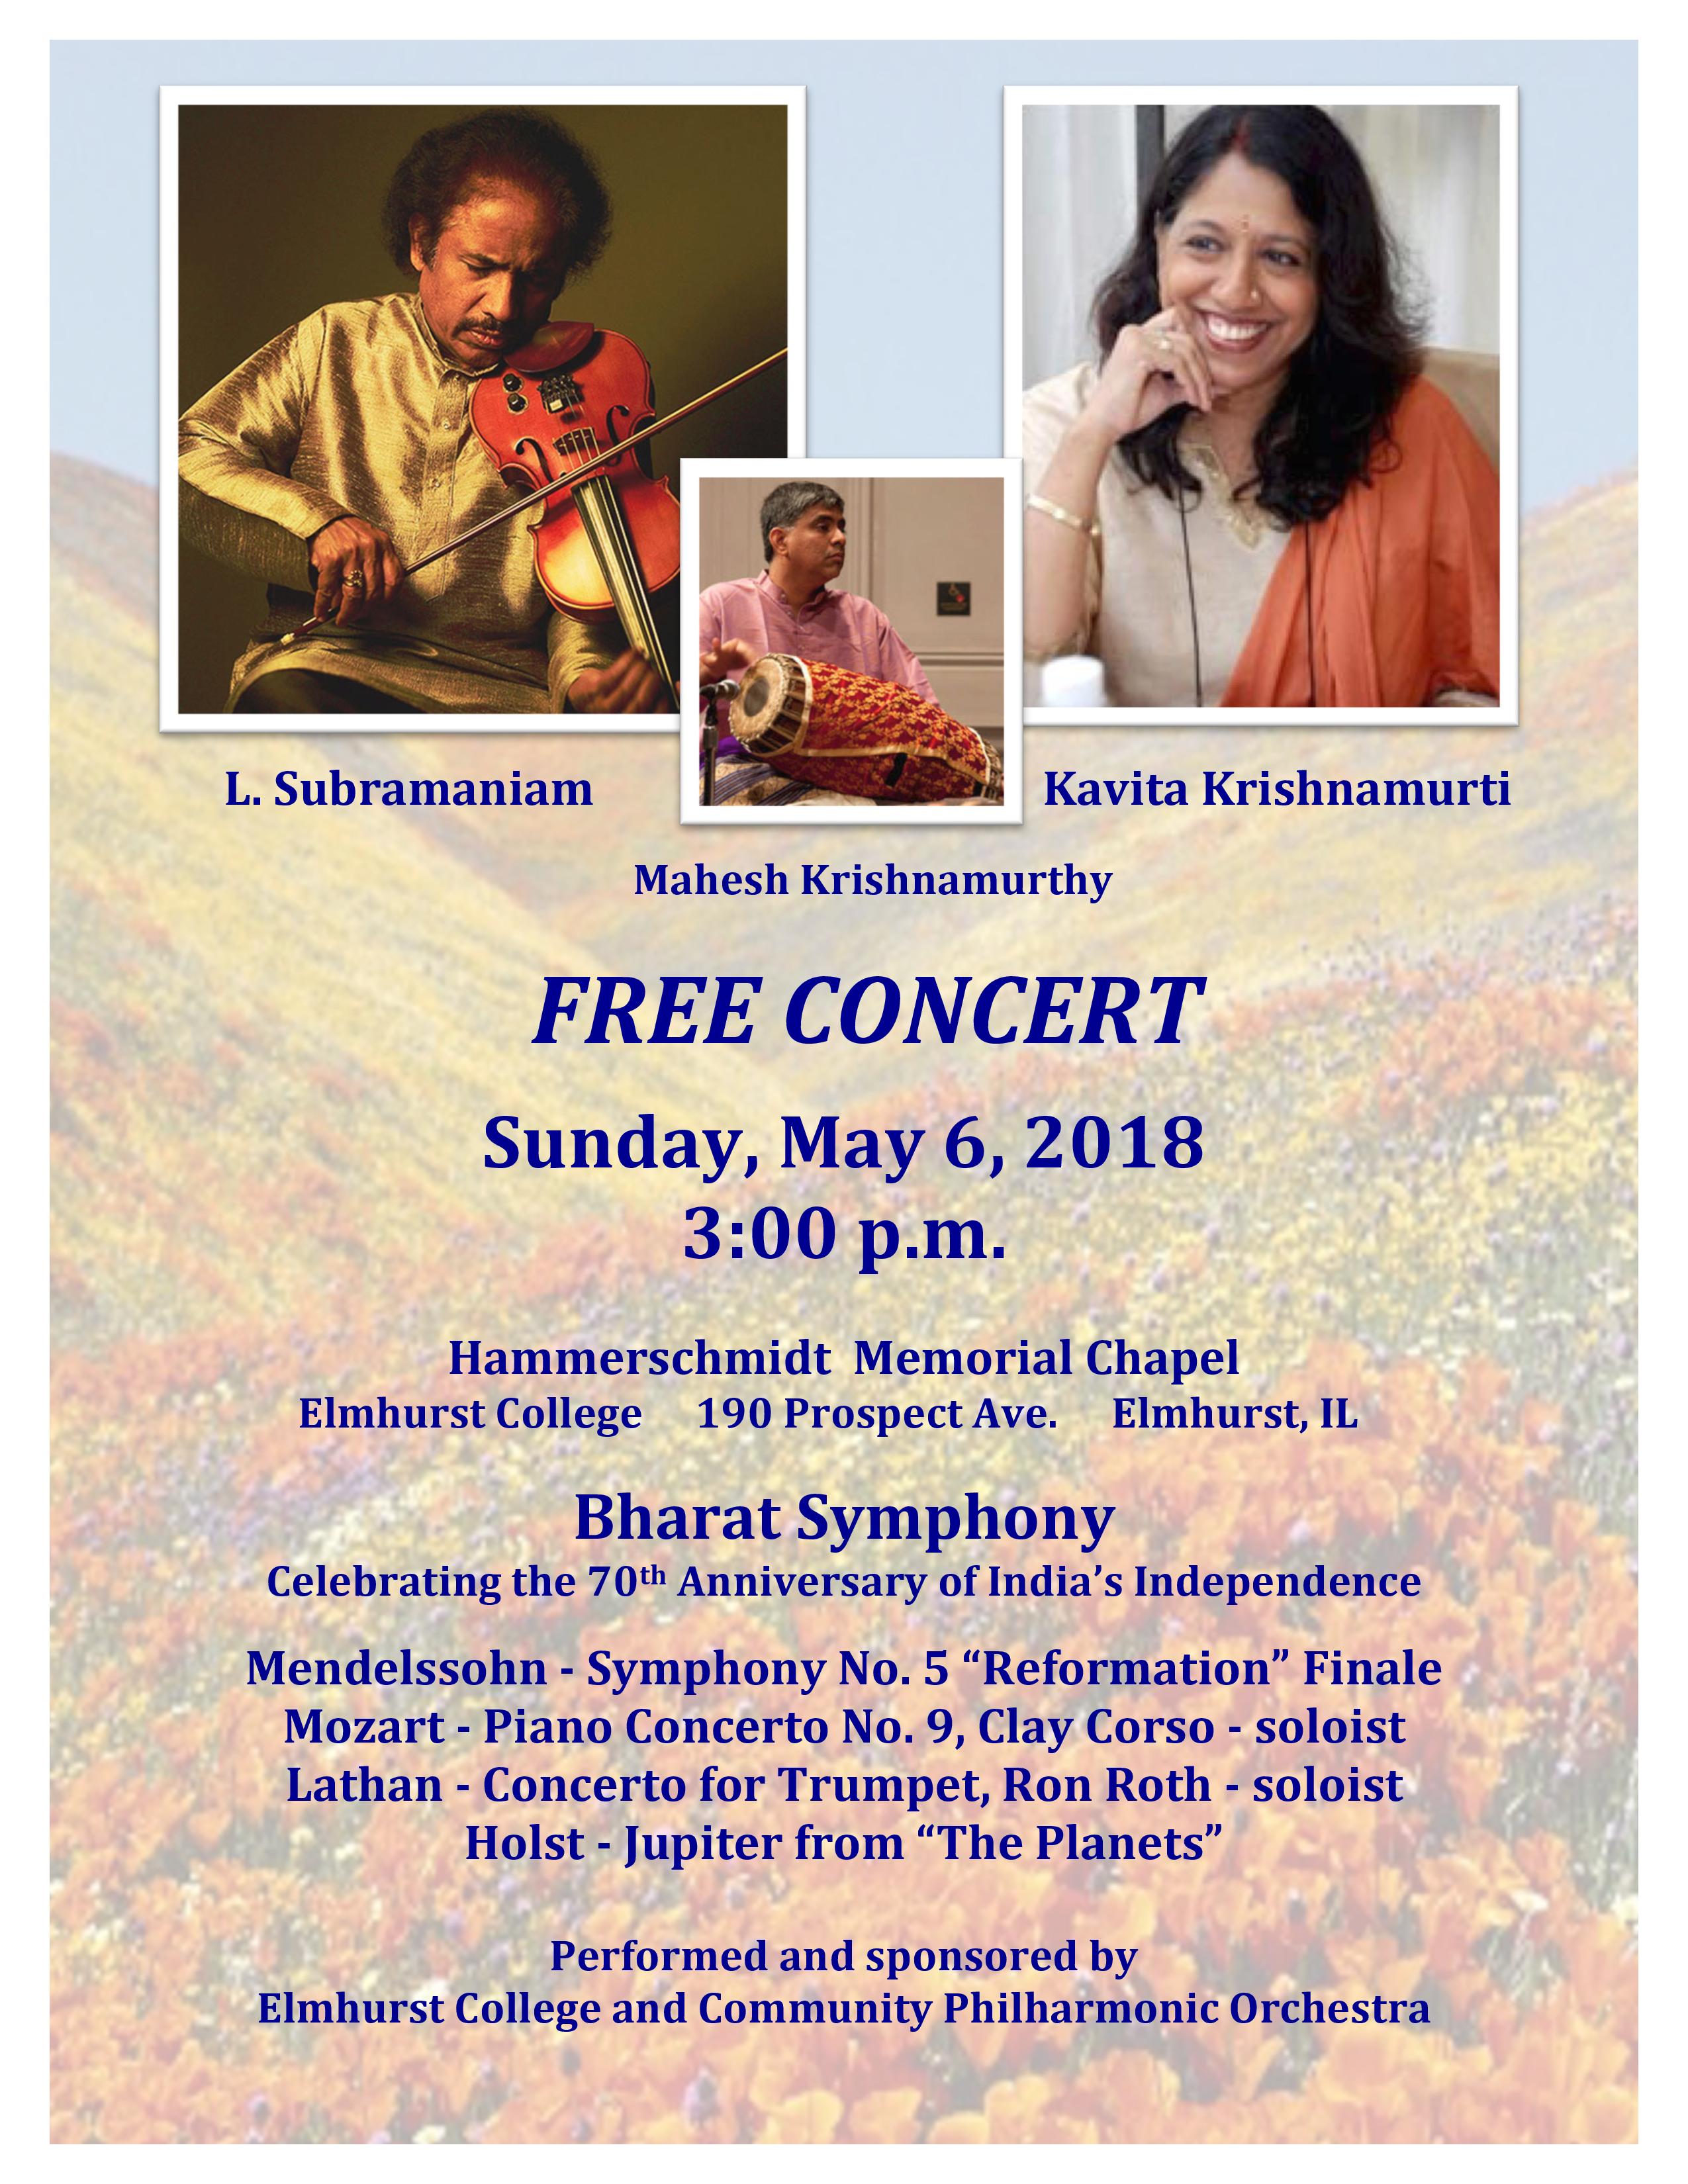 Bharat Symphony featuring L. Subramaniam and Kavita Krishnamurti